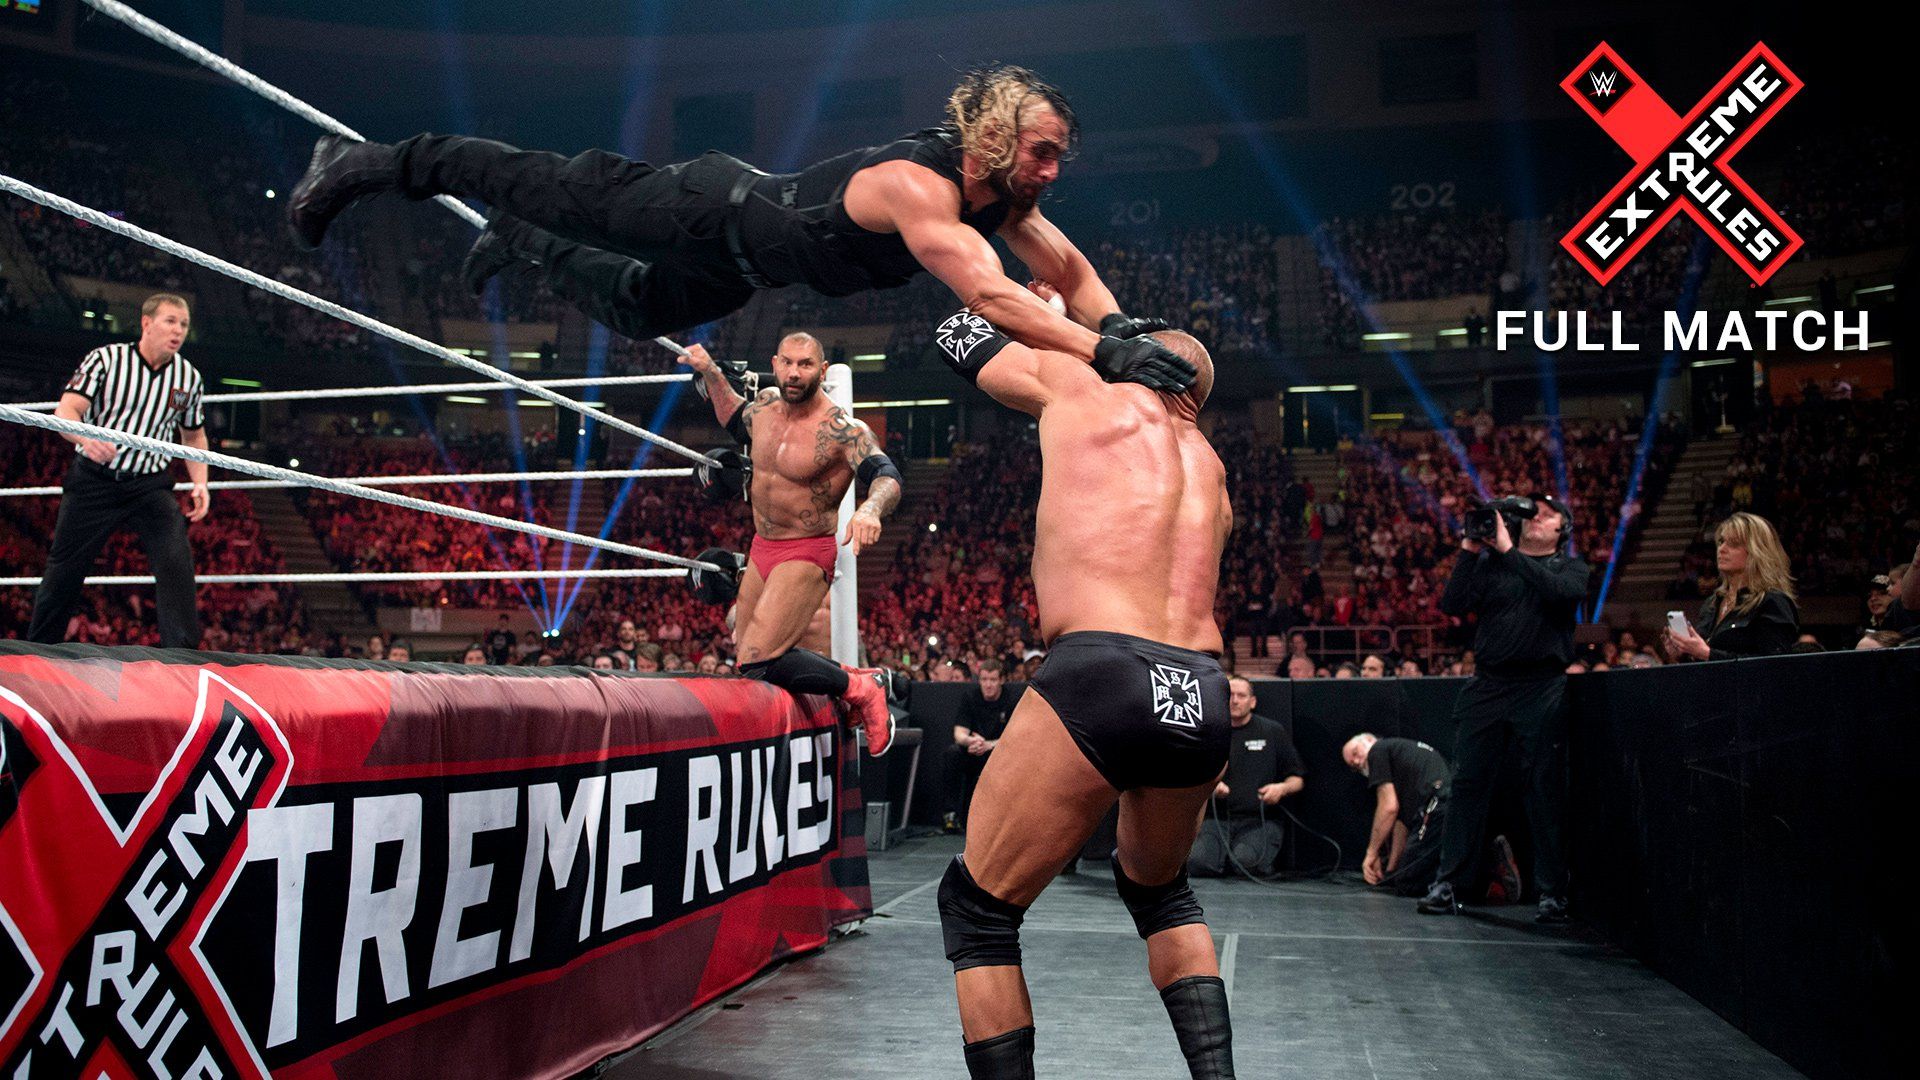 Seth Rollins dives on Triple H